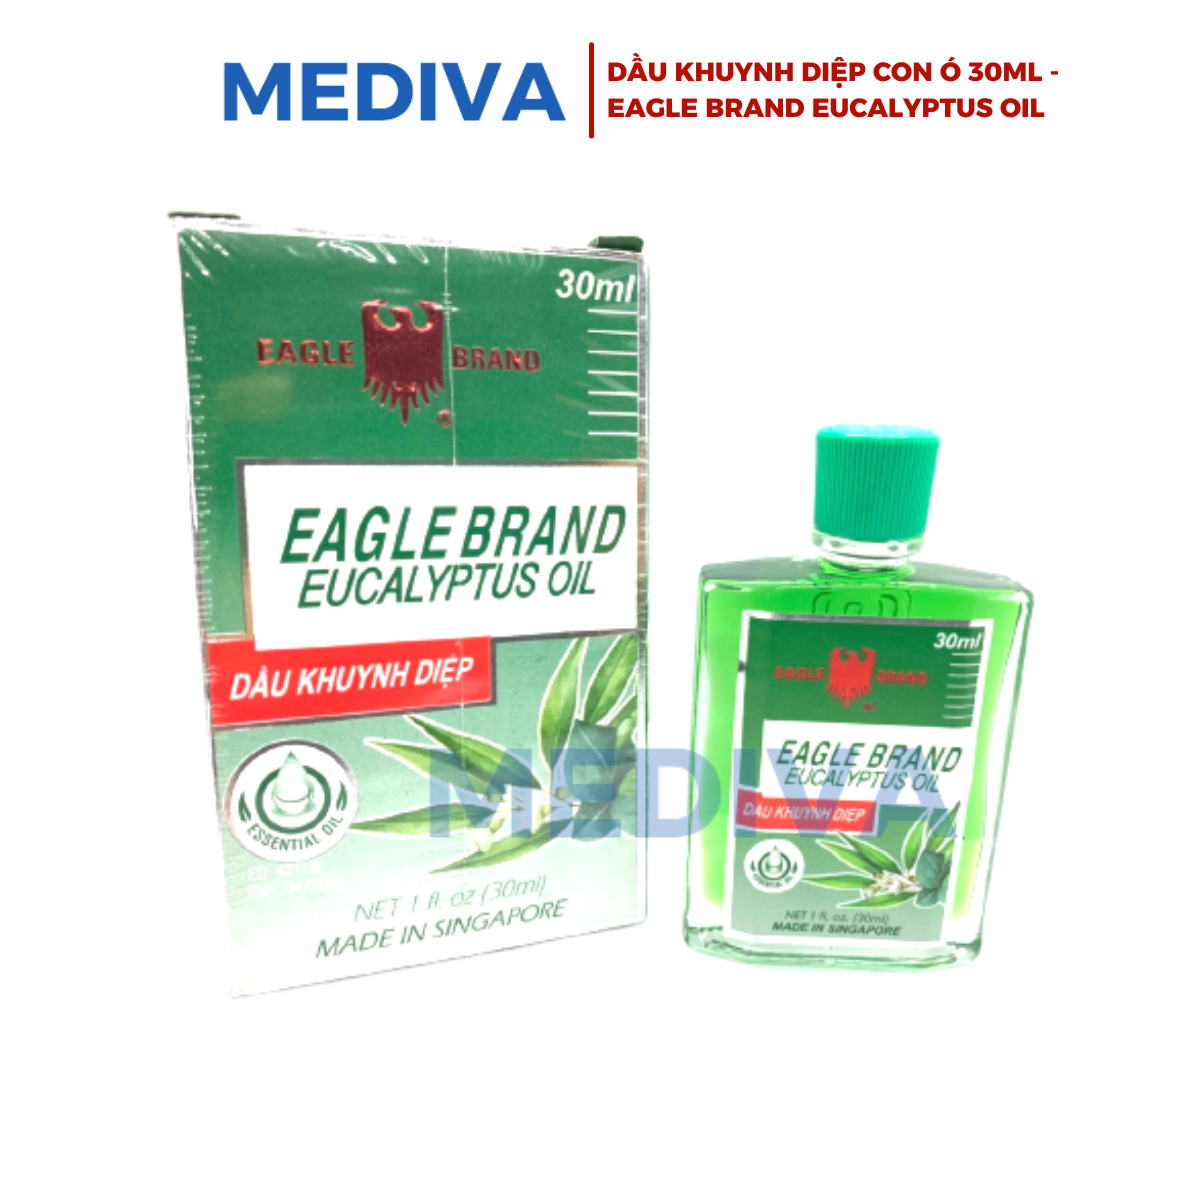 Dầu Khuynh Diệp Con Ó Singapore - Eagle Brand Eucalyptus Oil 30ml